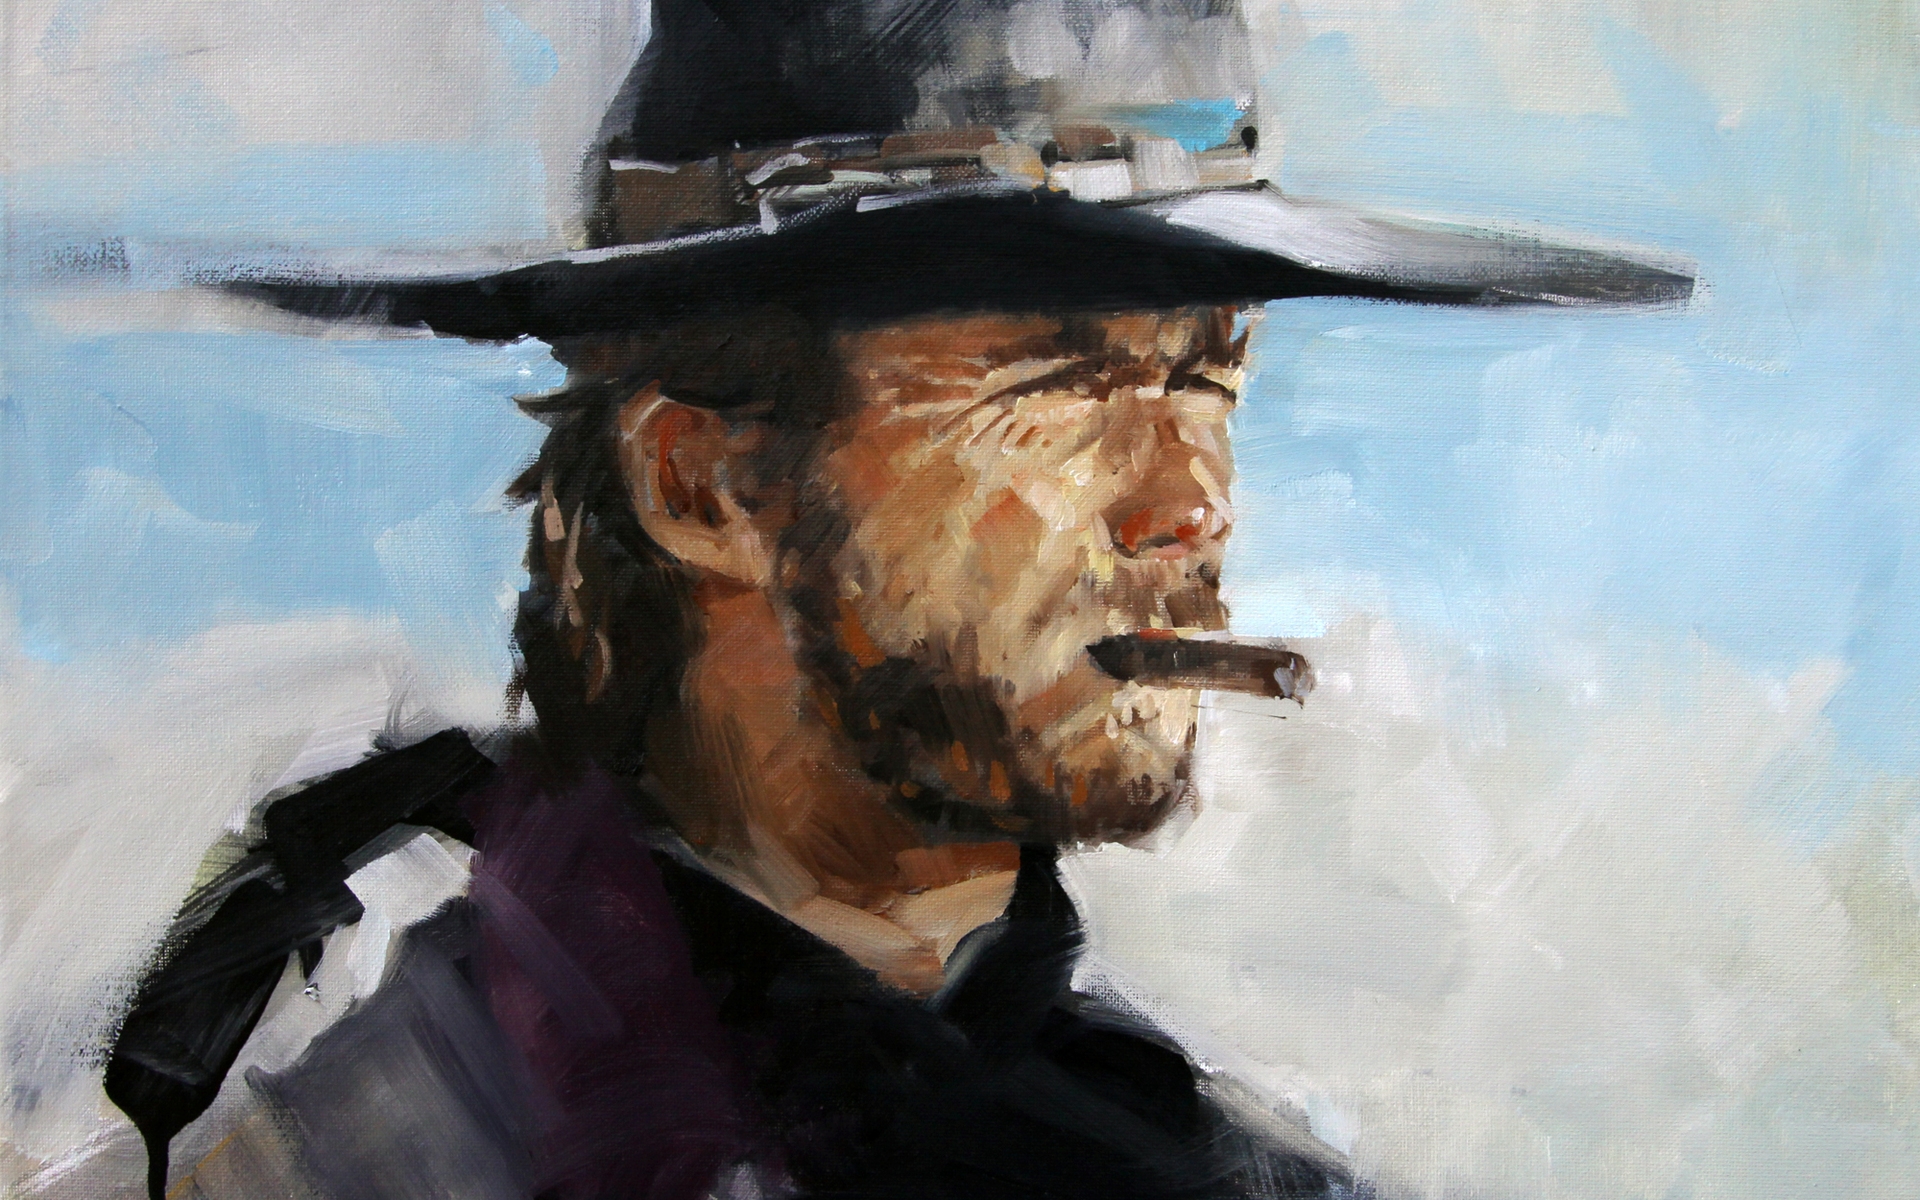 Clint Eastwood Painting 1920 x 1200 widescreen Wallpaper